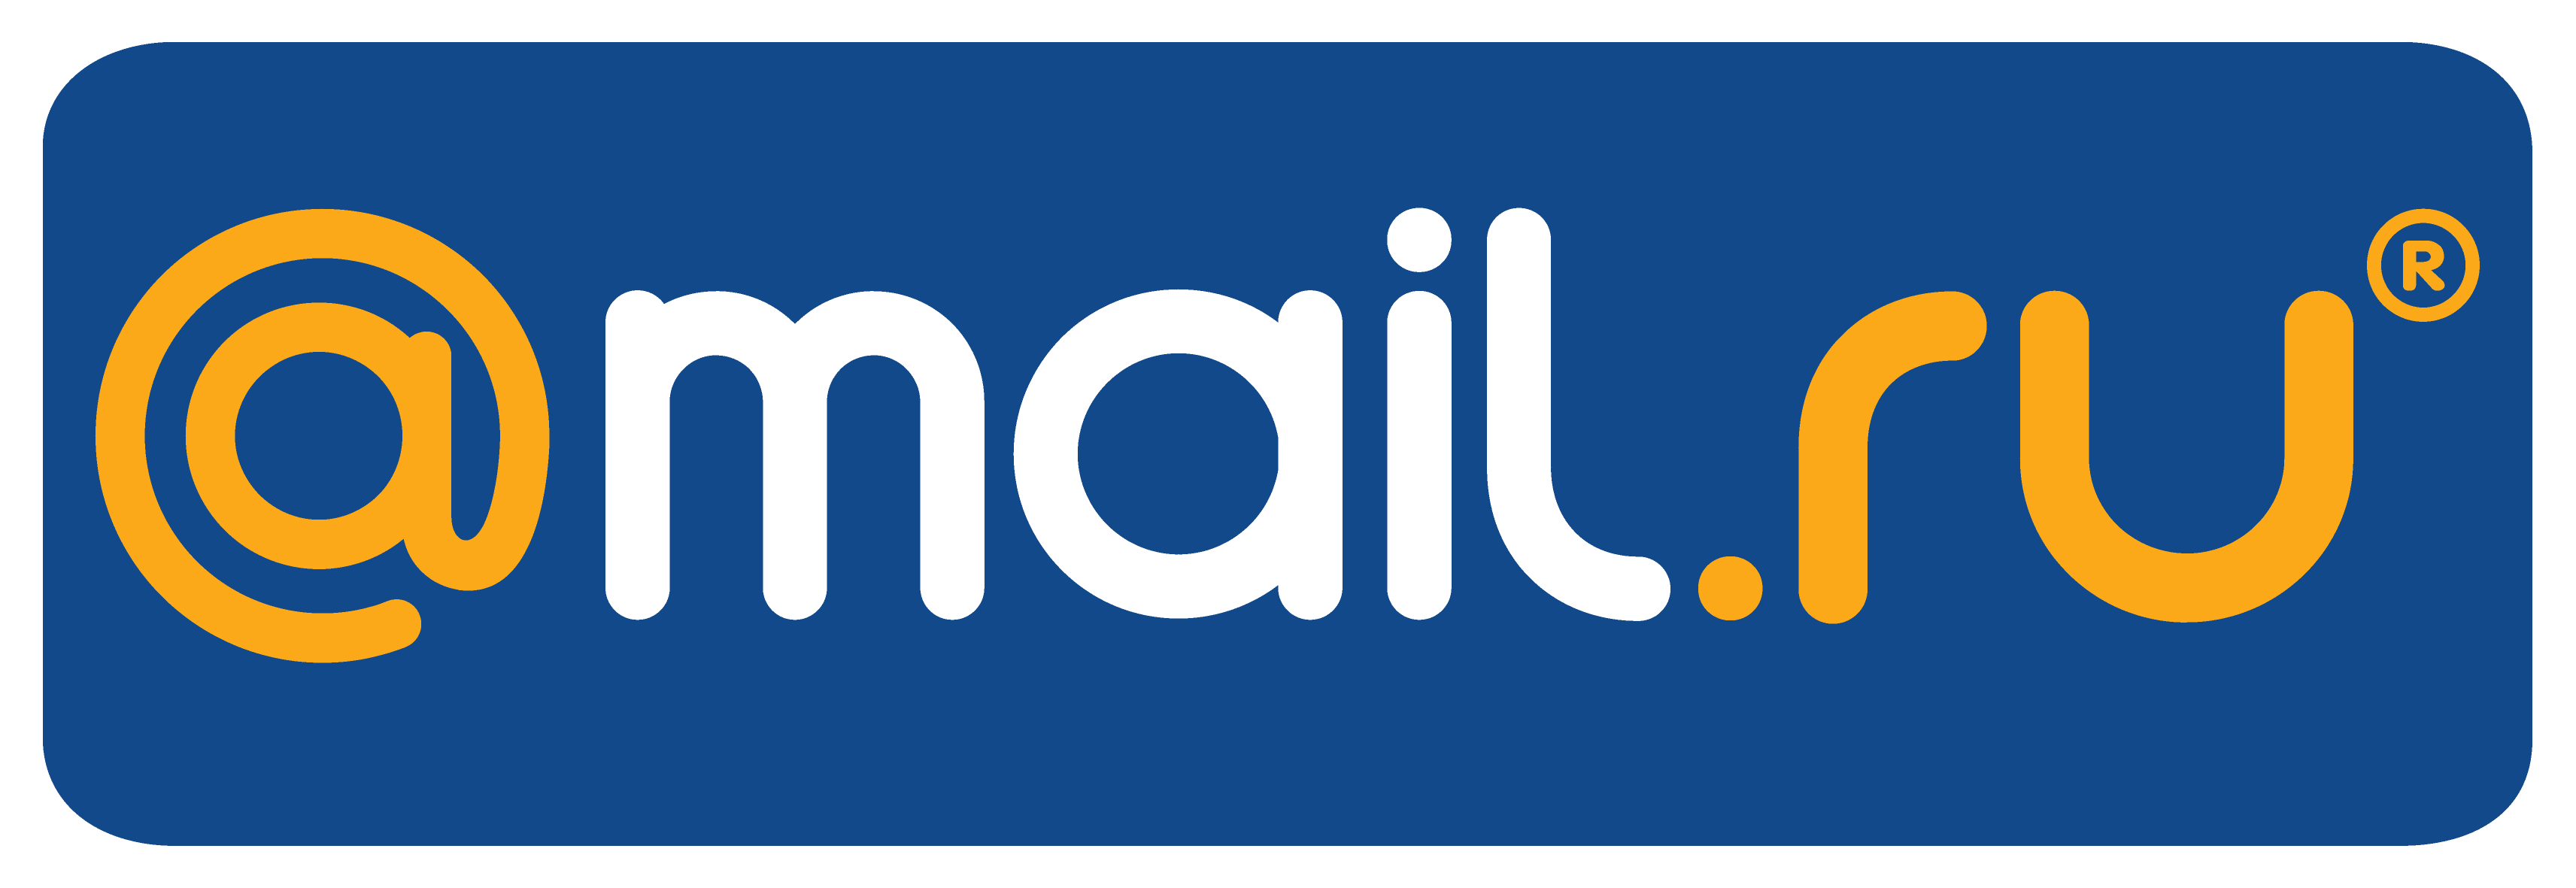 Mail. Mail.ru лого. Почта майл. Логотип мейл ру. Dlyakojida ru